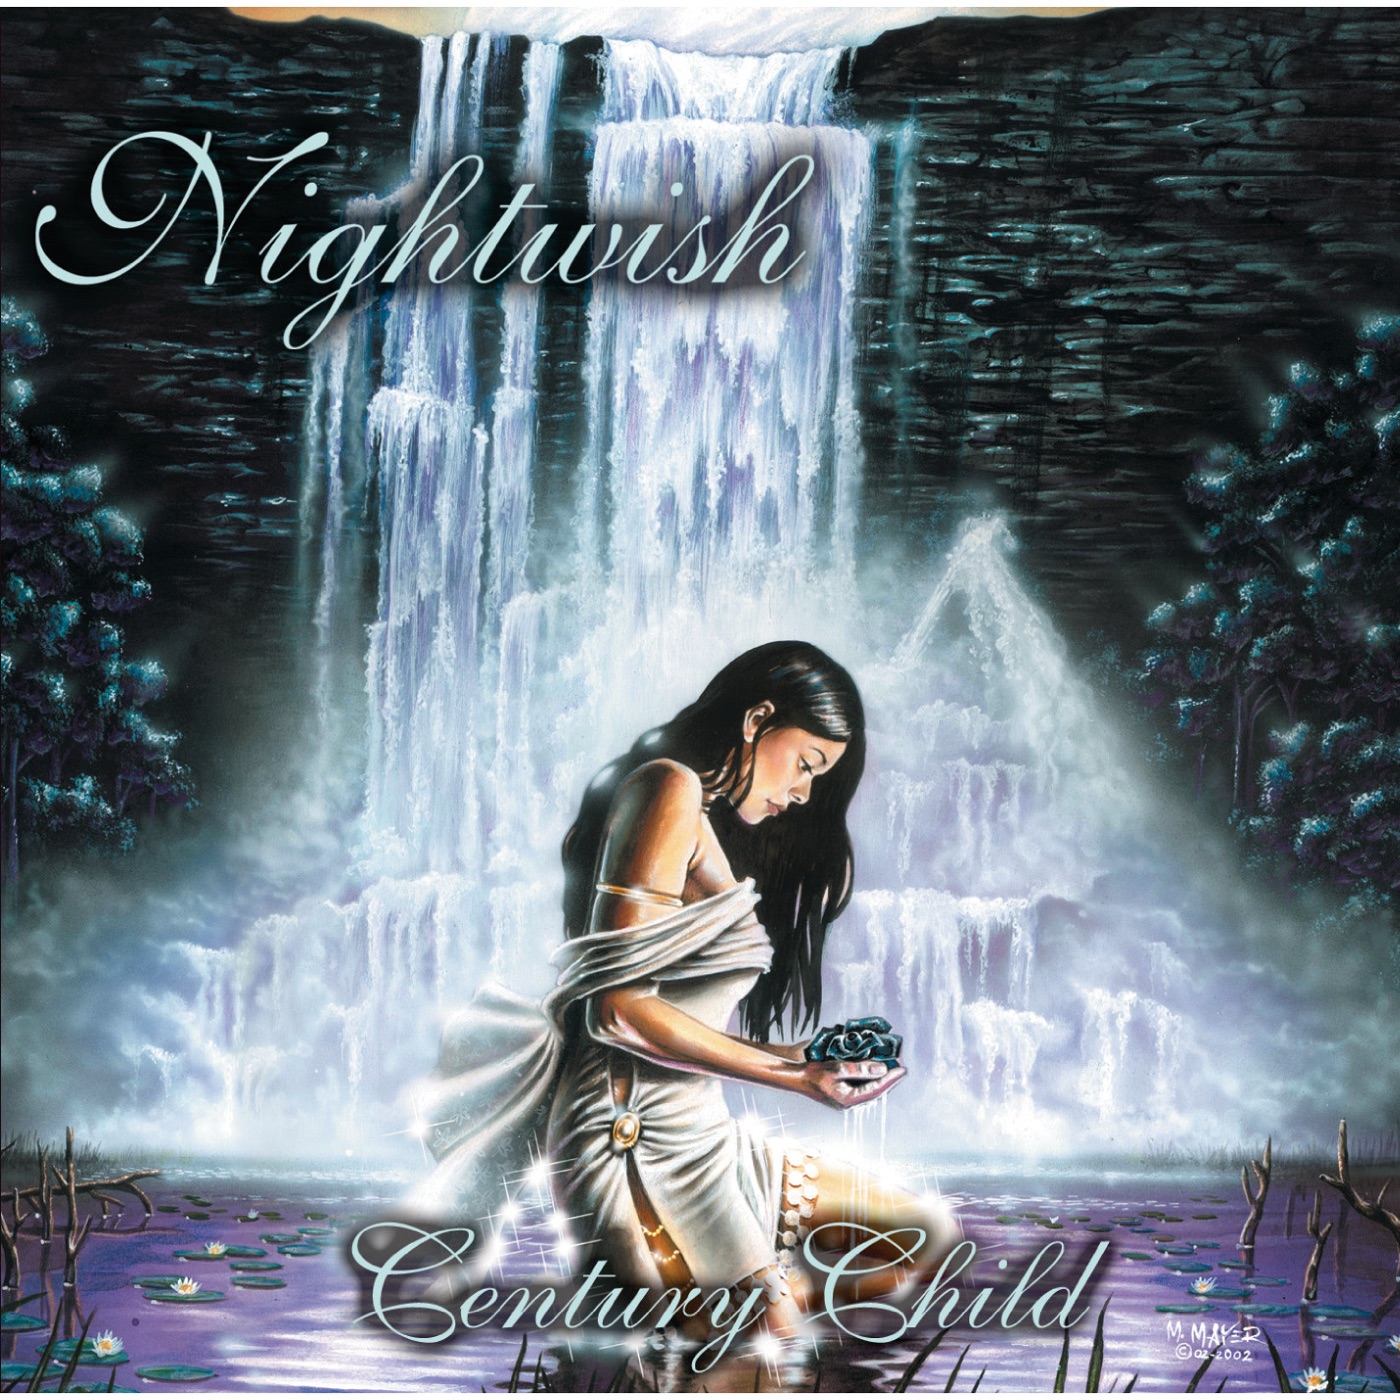 Century Child by Nightwish